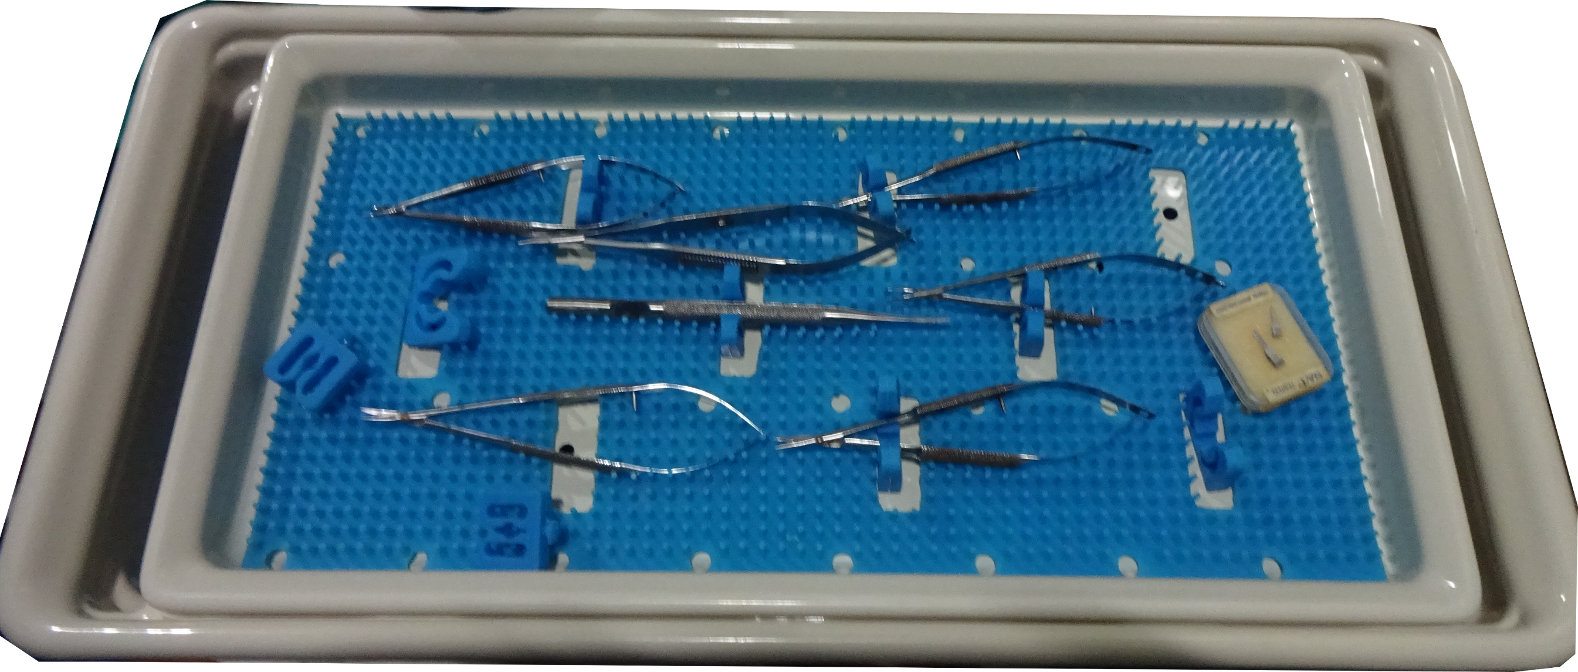 endosys plastic sterilization trays